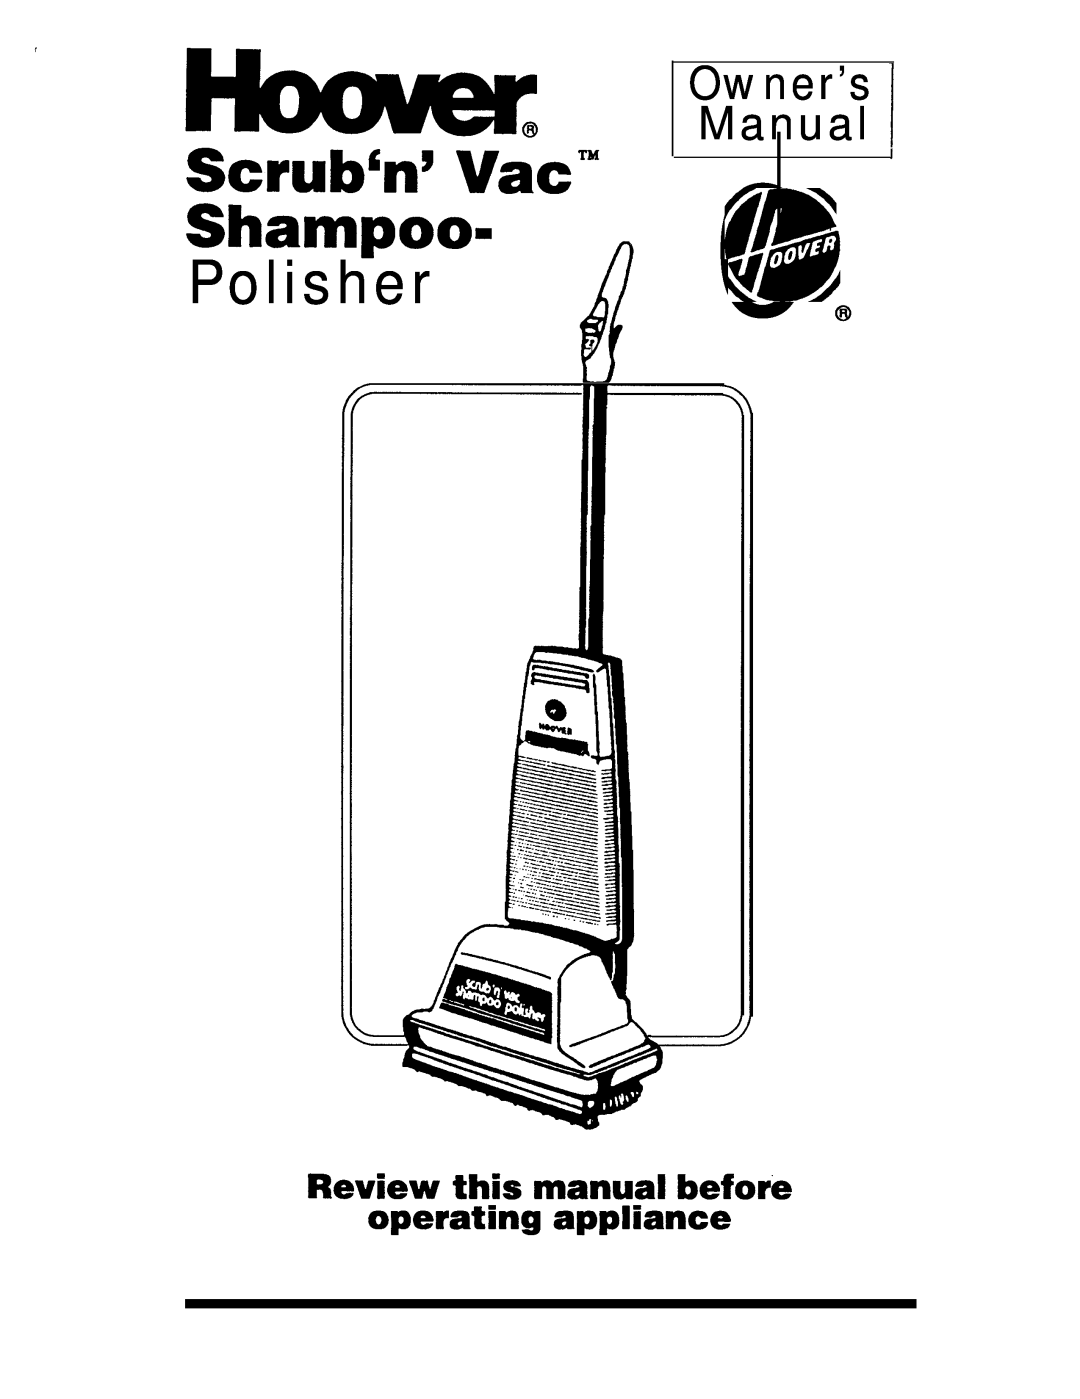 Hoover Shampoo- Polisher manual Review this manual before operating appliance, 1/I’, 0vi@@, ScrubW Vat” Shampoo Polisher R 